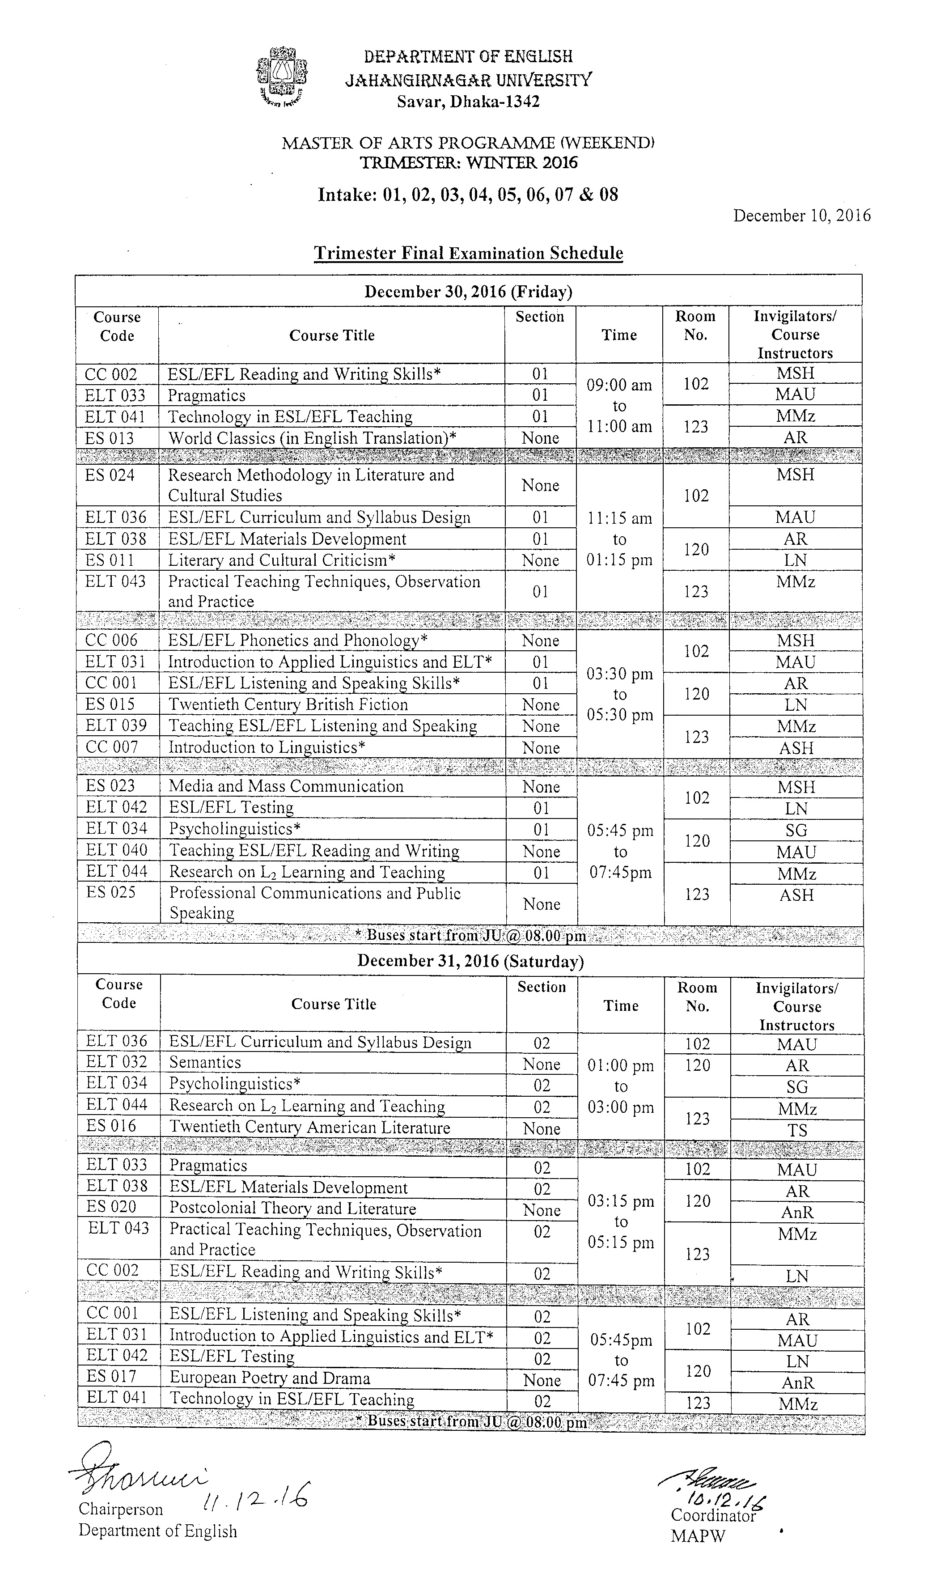 final-examination-schedule-trimester-winter-2016 – Department of